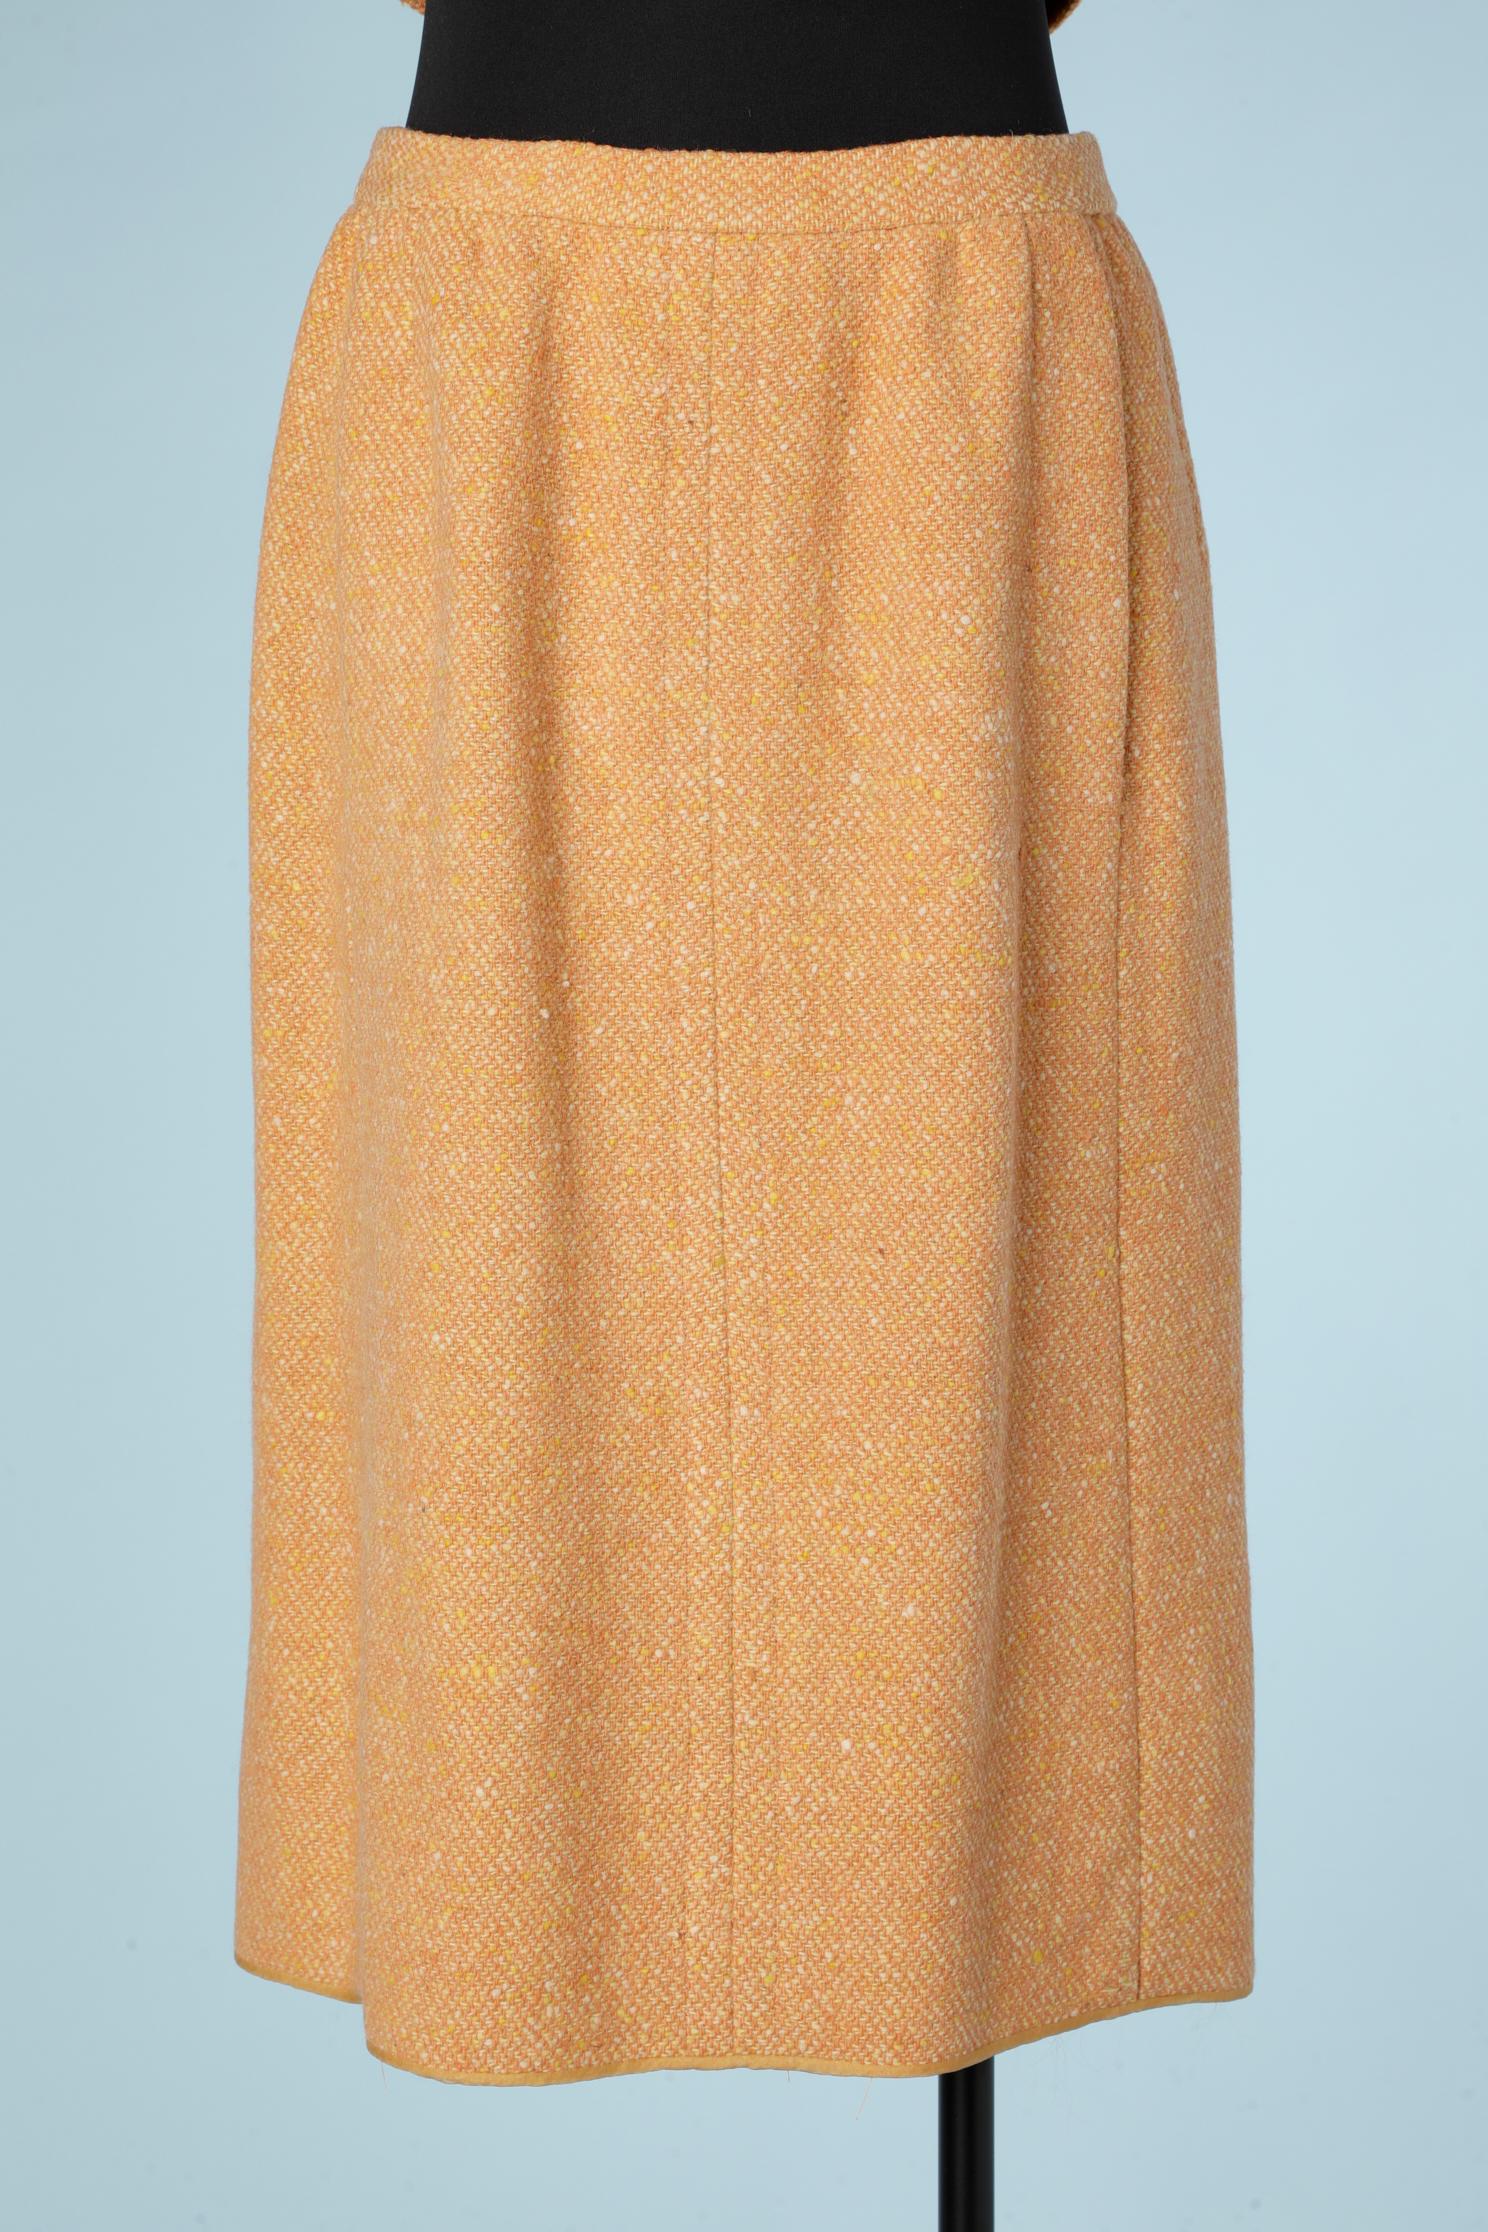 Peach tweed skirt-suit Balenciaga  In Excellent Condition For Sale In Saint-Ouen-Sur-Seine, FR